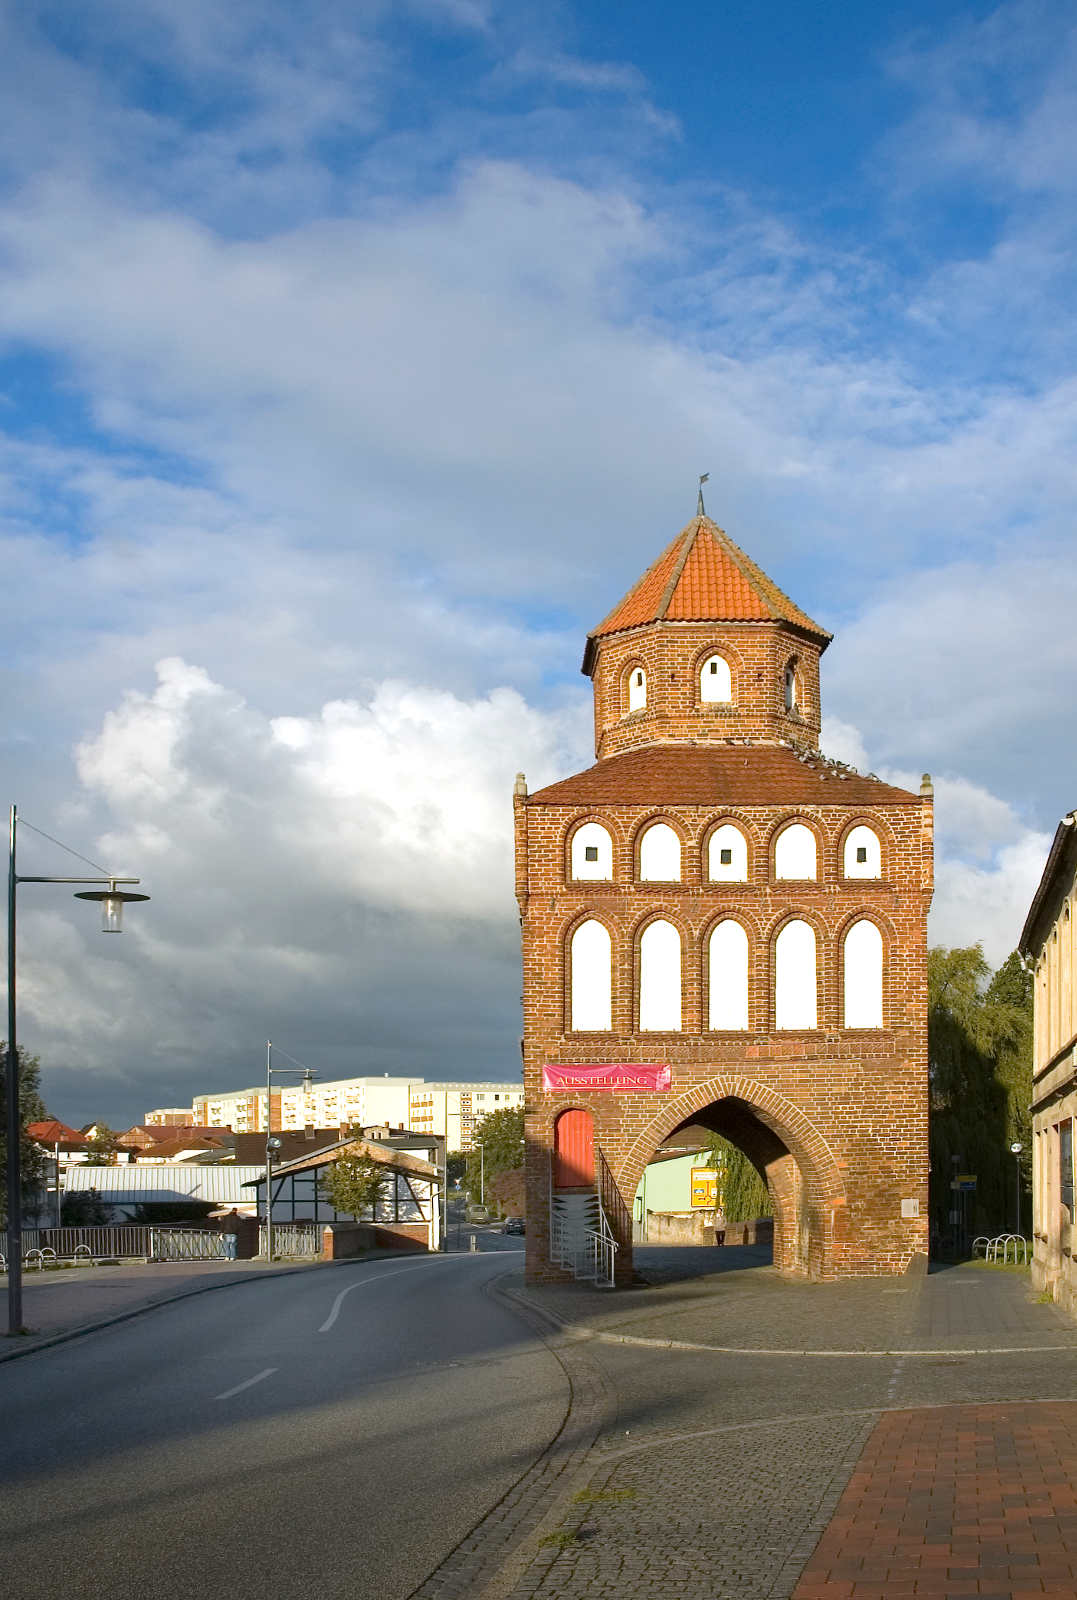 Rostocker Tor, Ribnitz